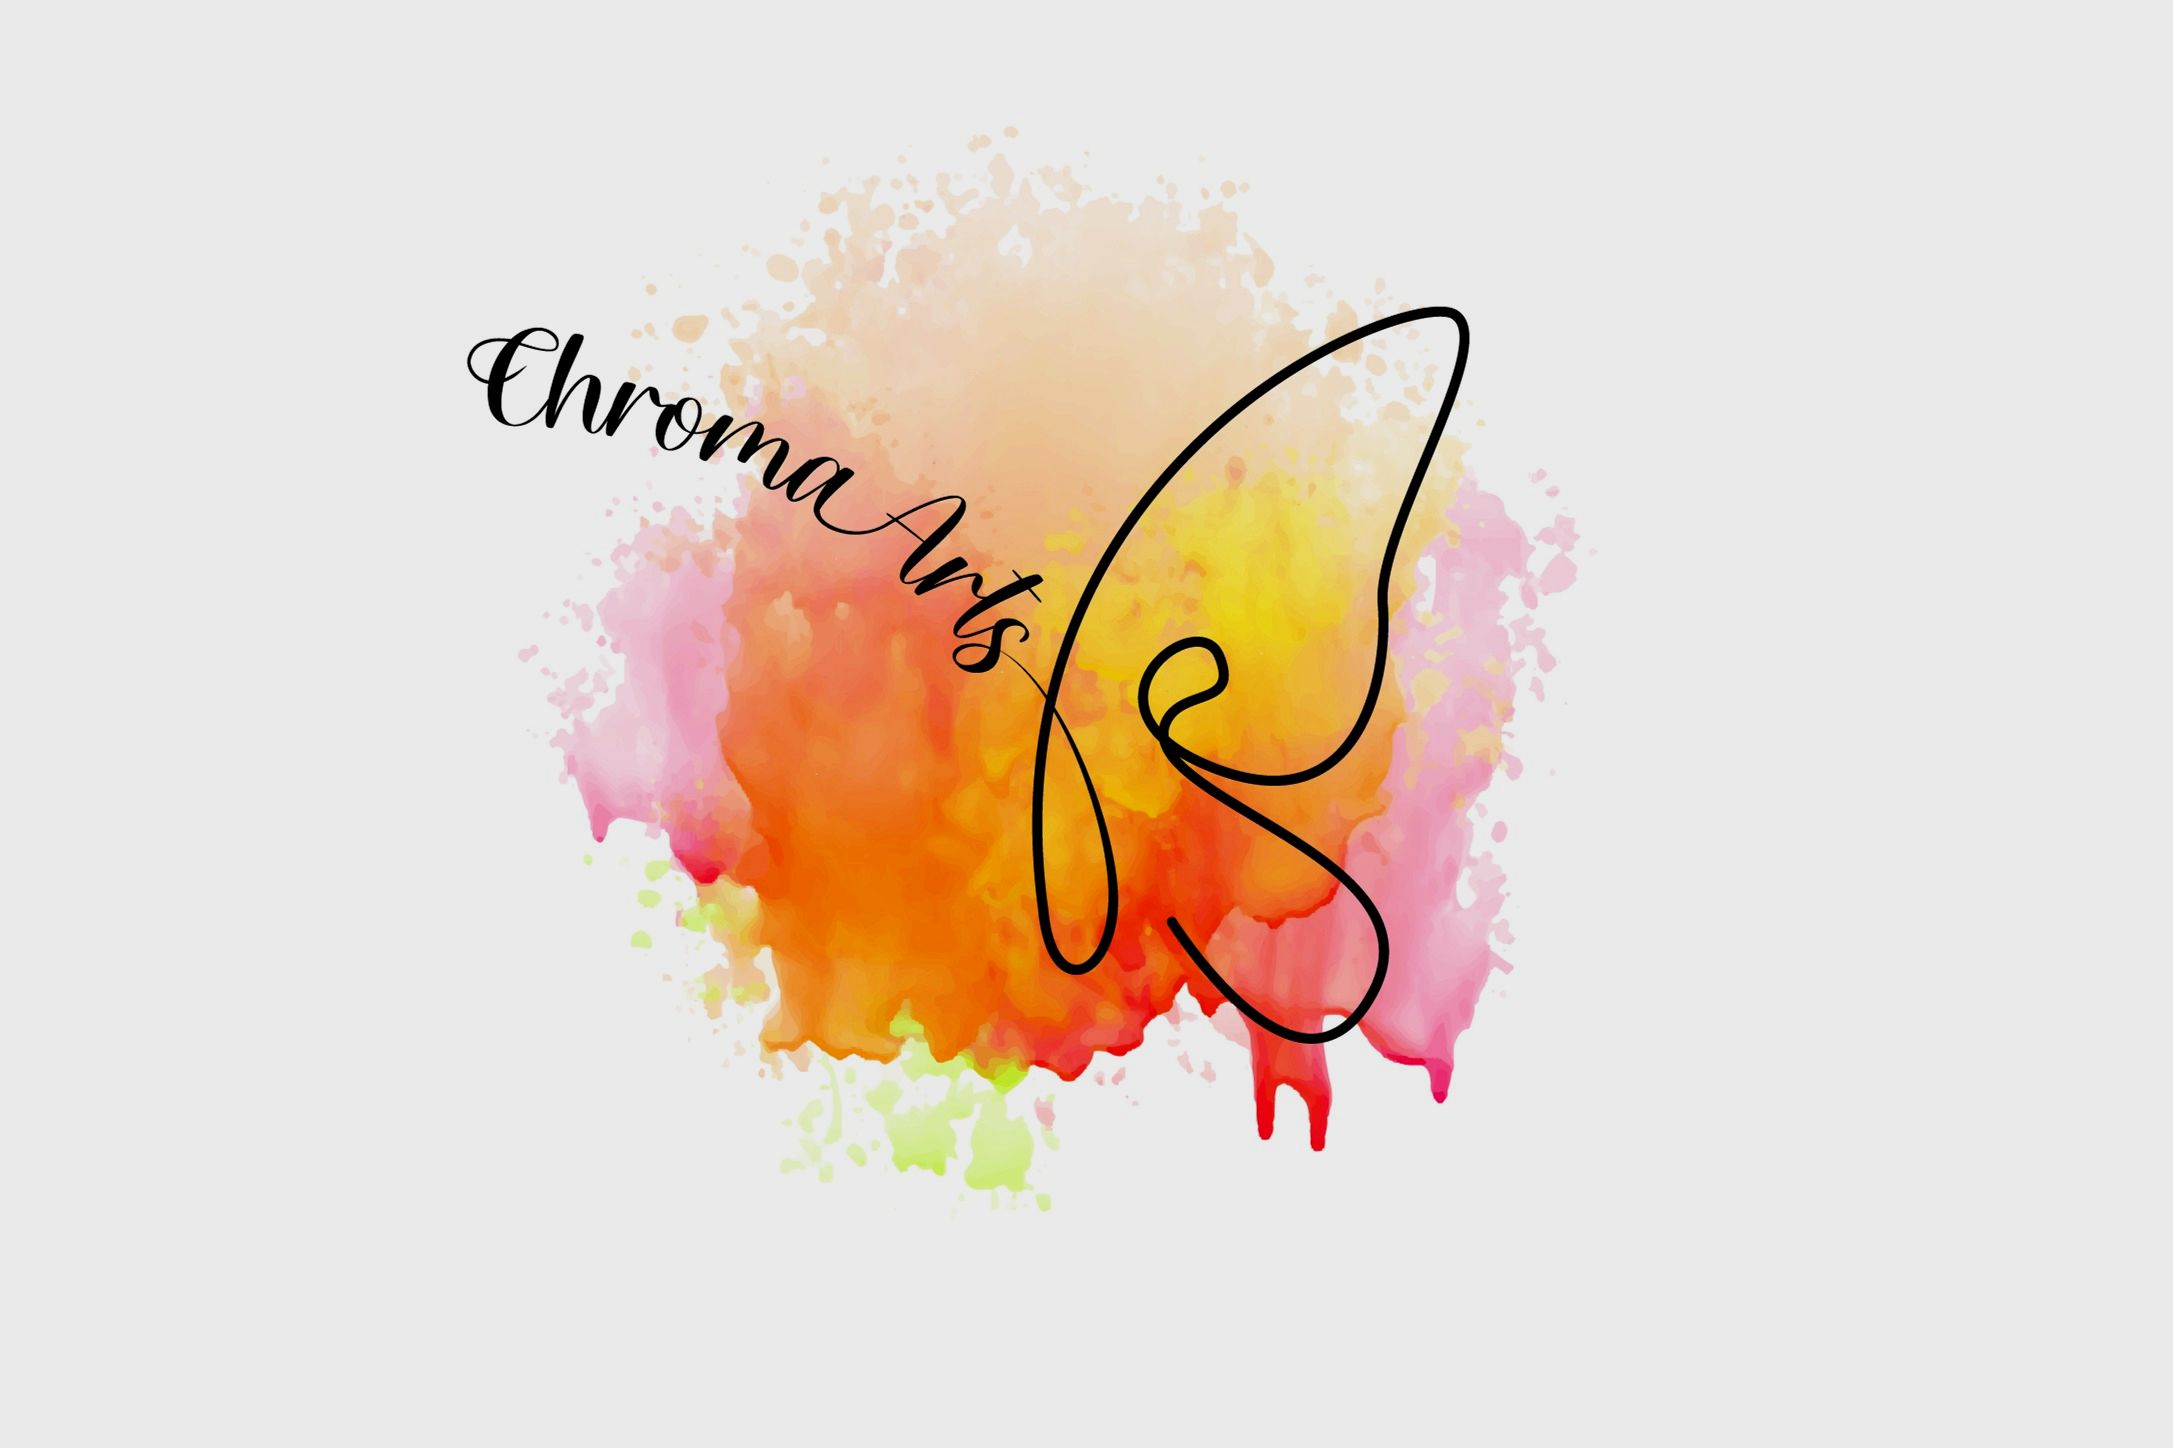 Chroma Arts